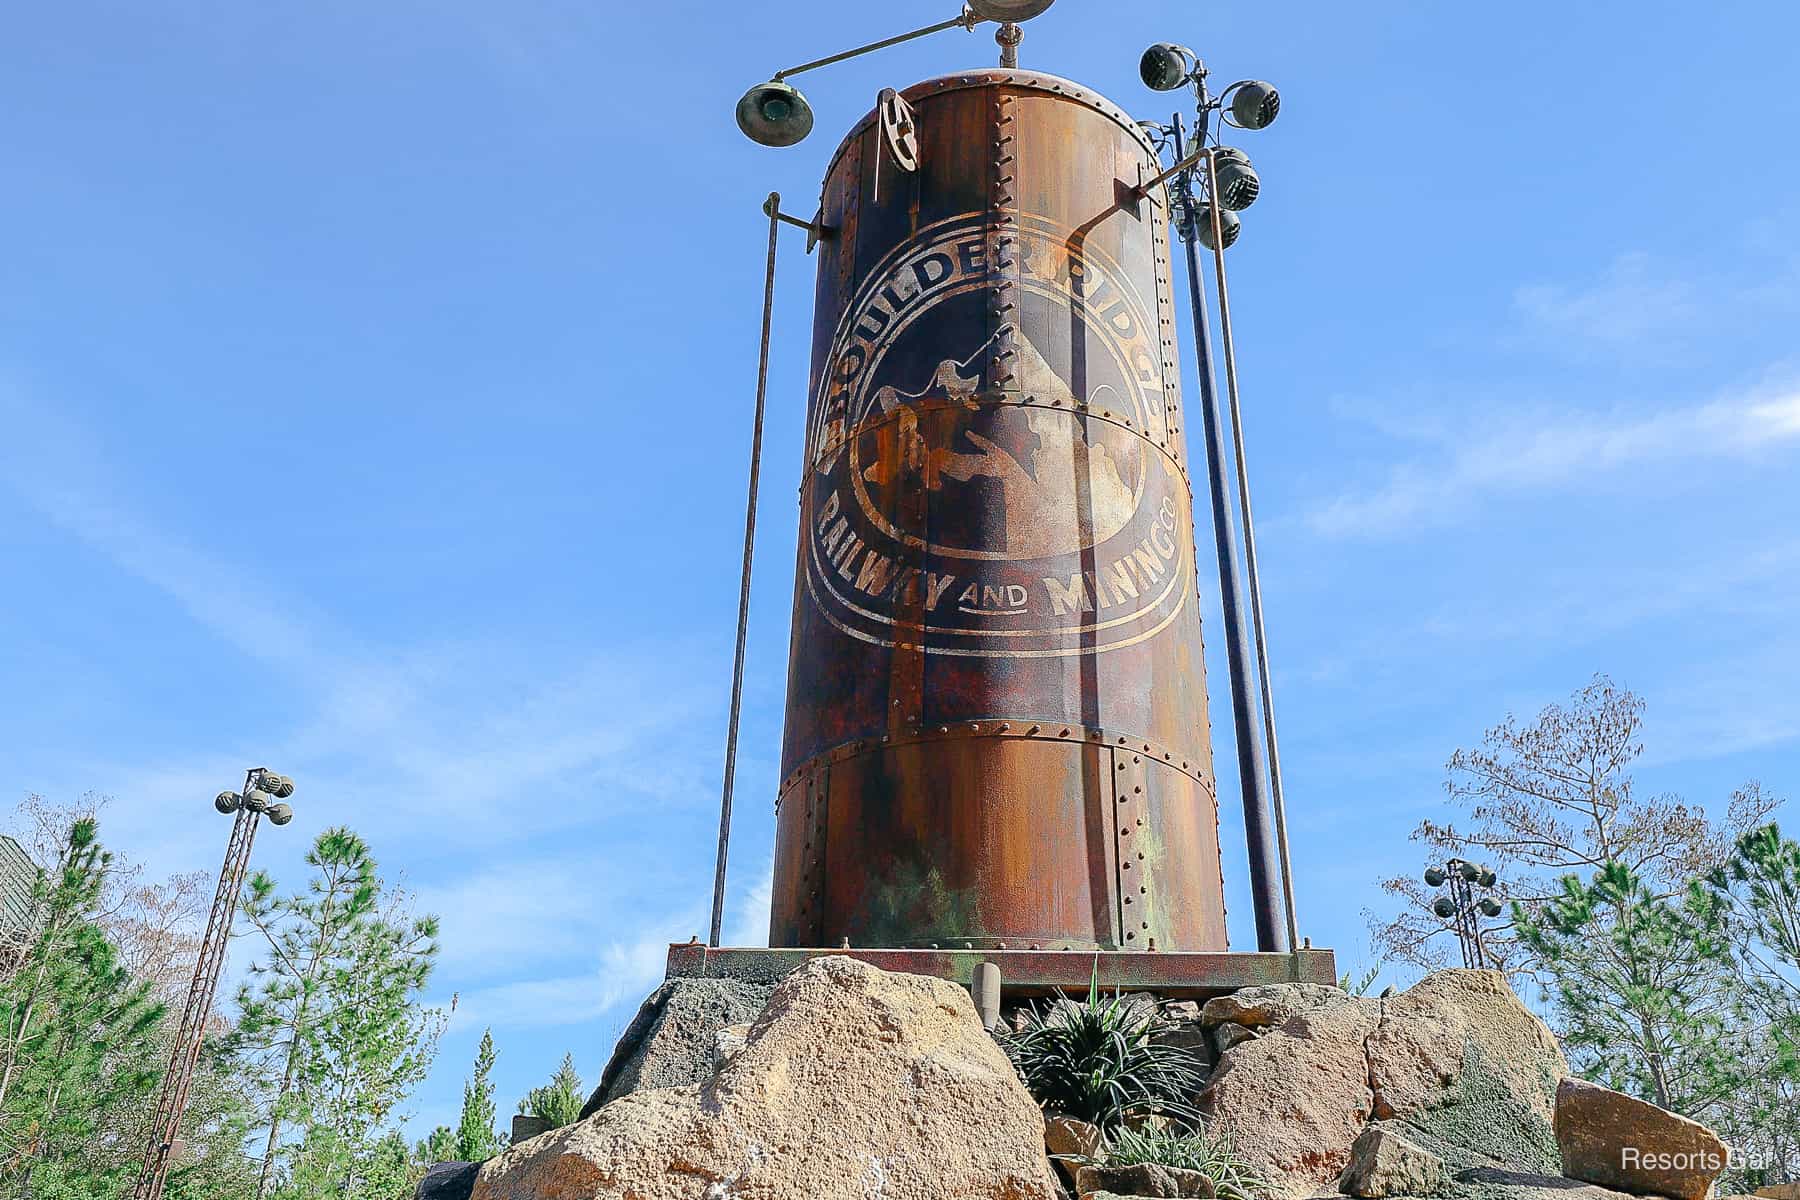 the rusty tank says Boulder Ridge Railway and Mining 